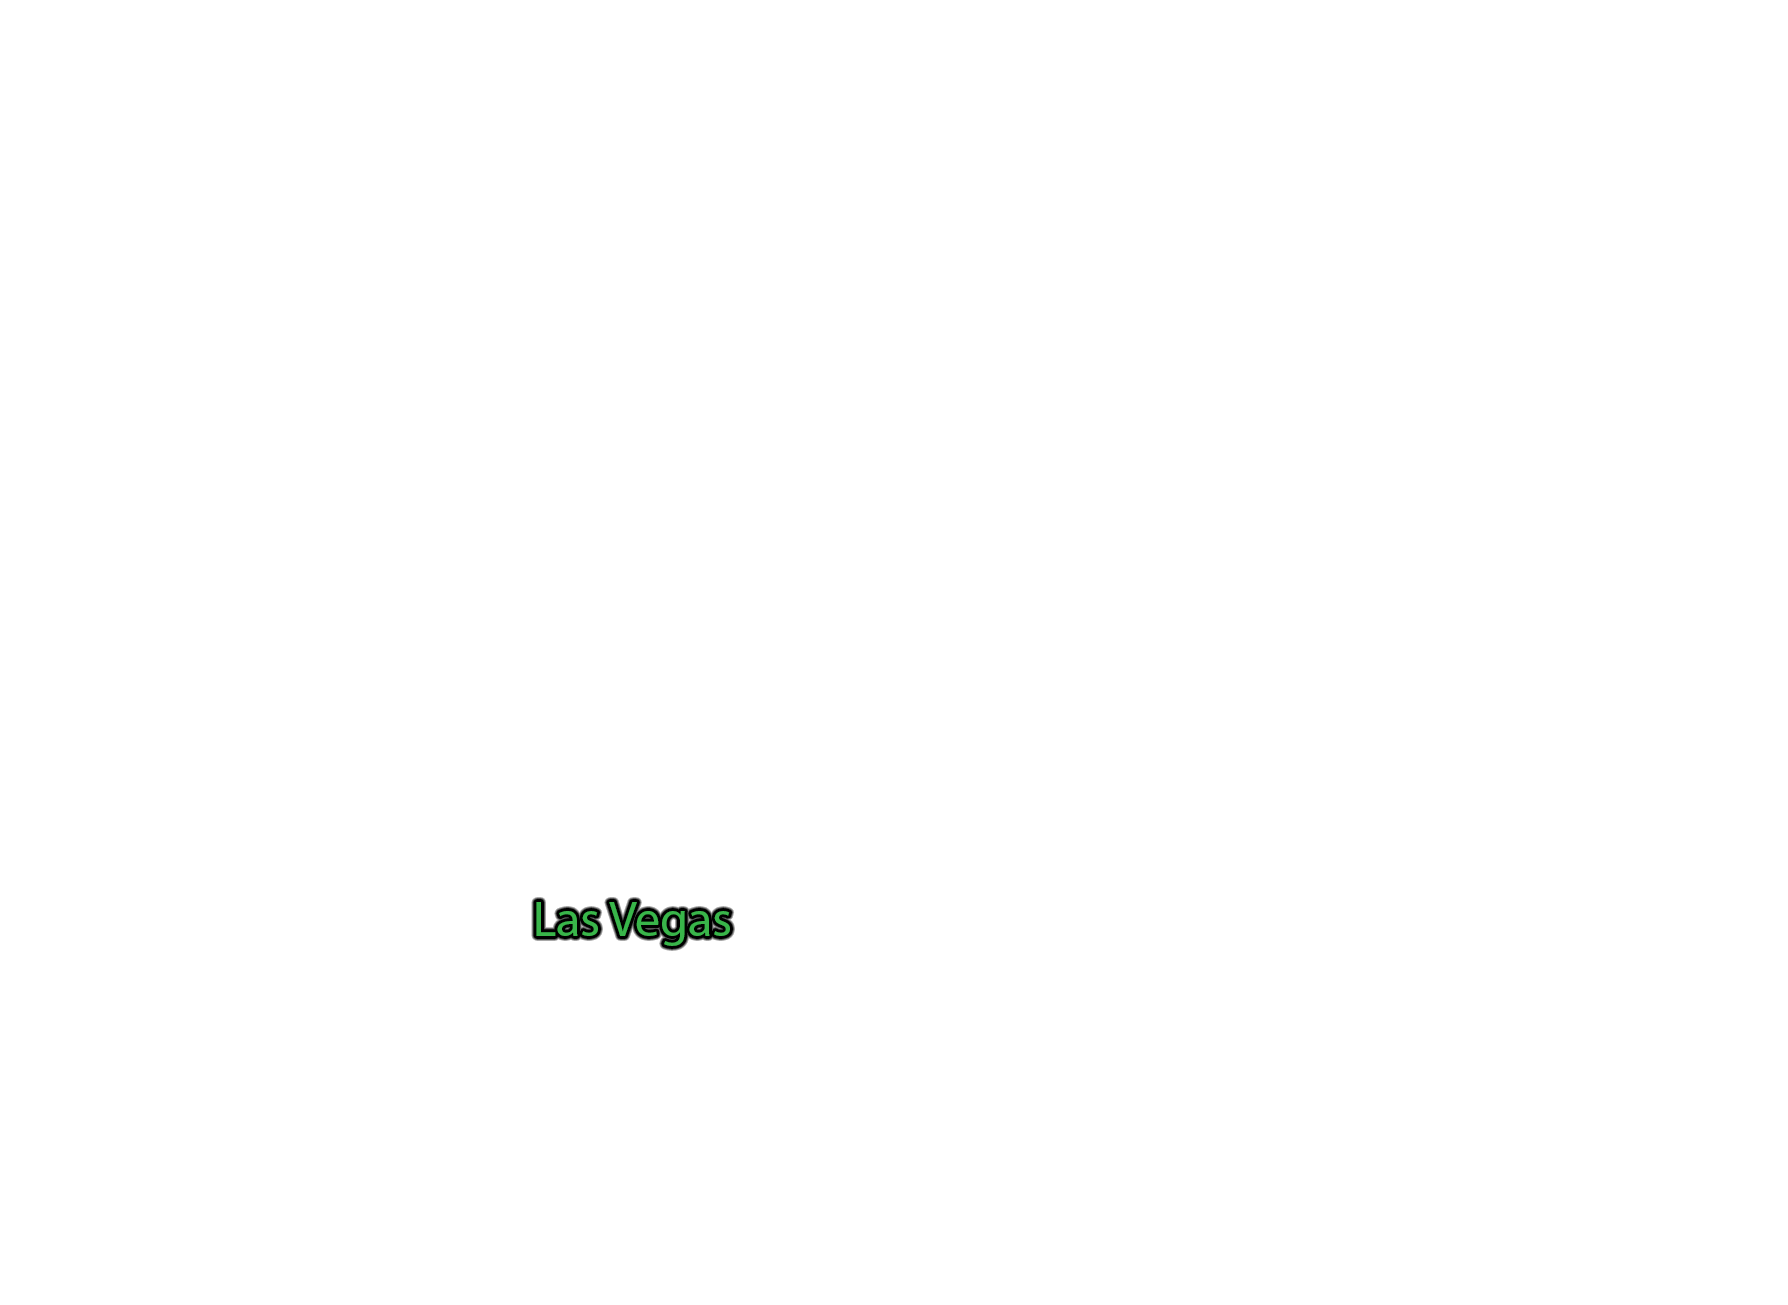 Las-Vegas label with glow